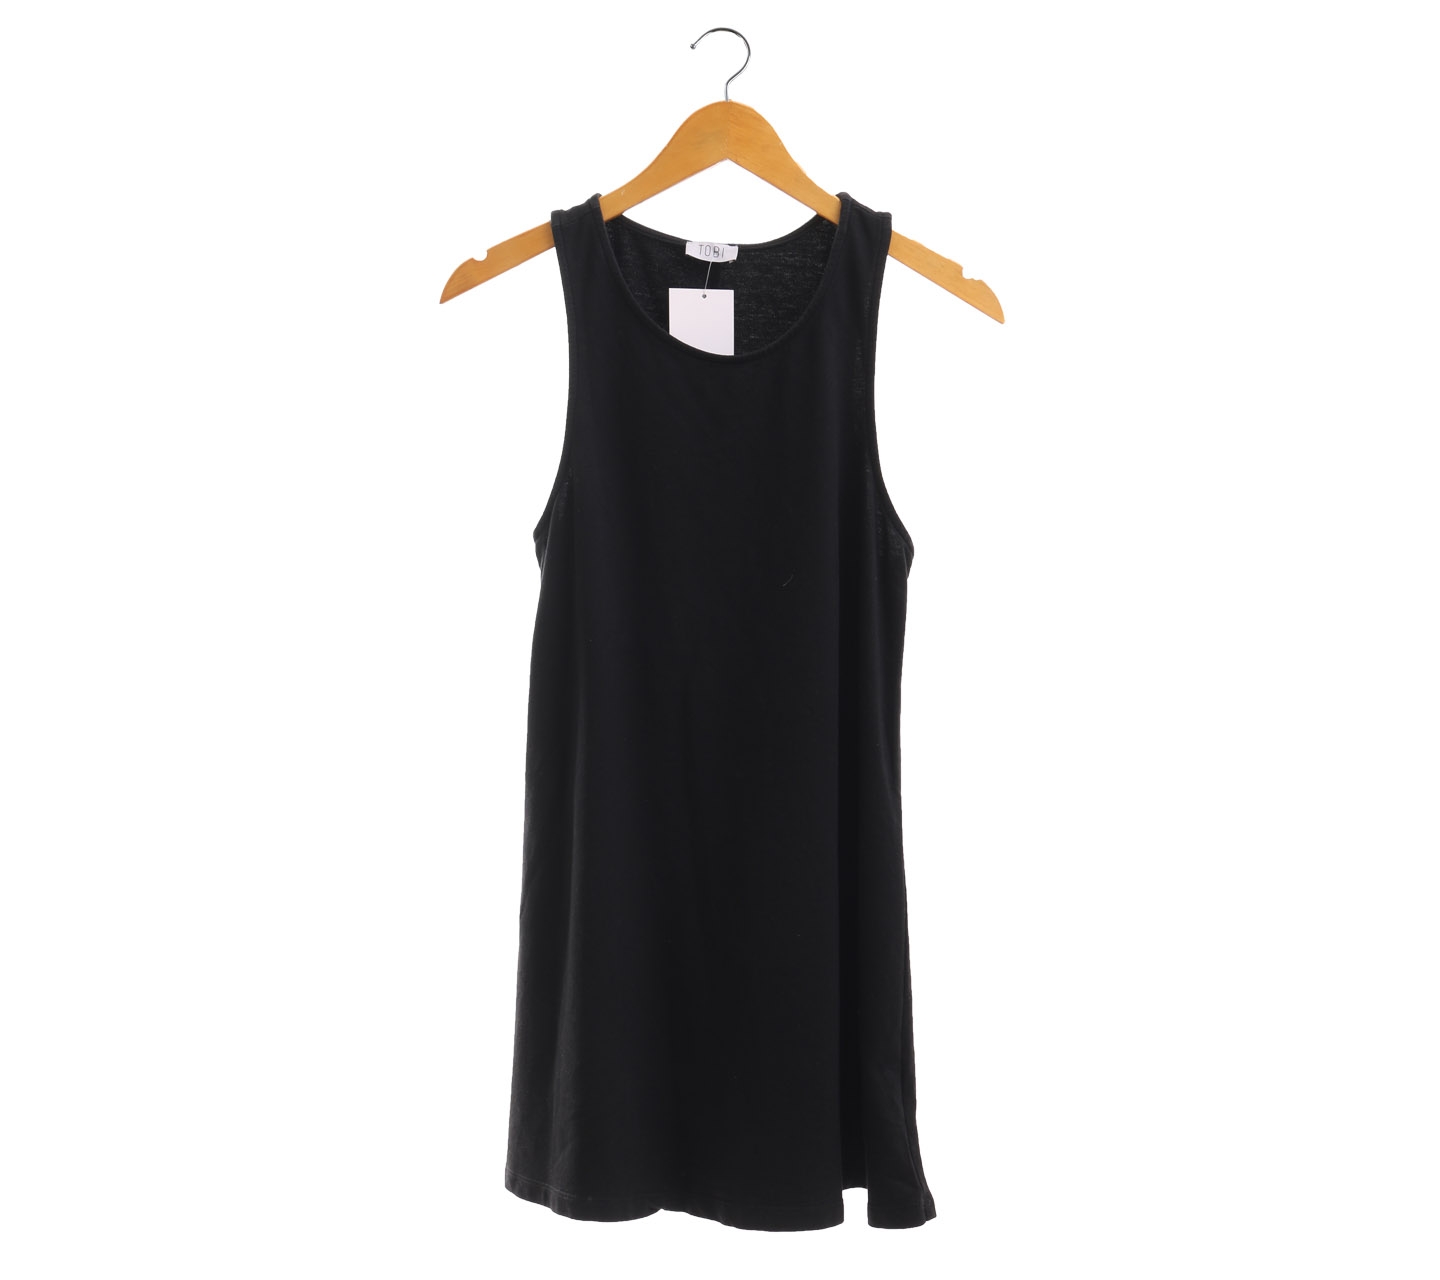 Tobi Black Mini Dress